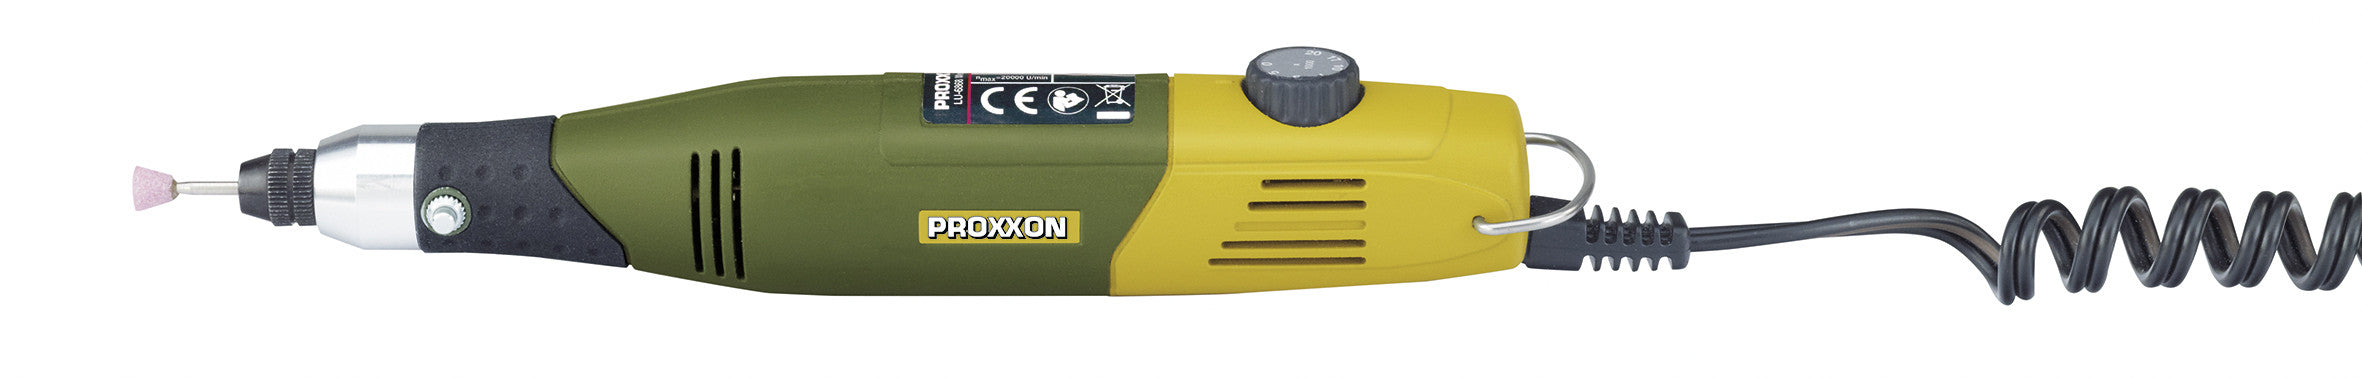 Proxxon 28510 trapano fresatore PROXXON GMBH